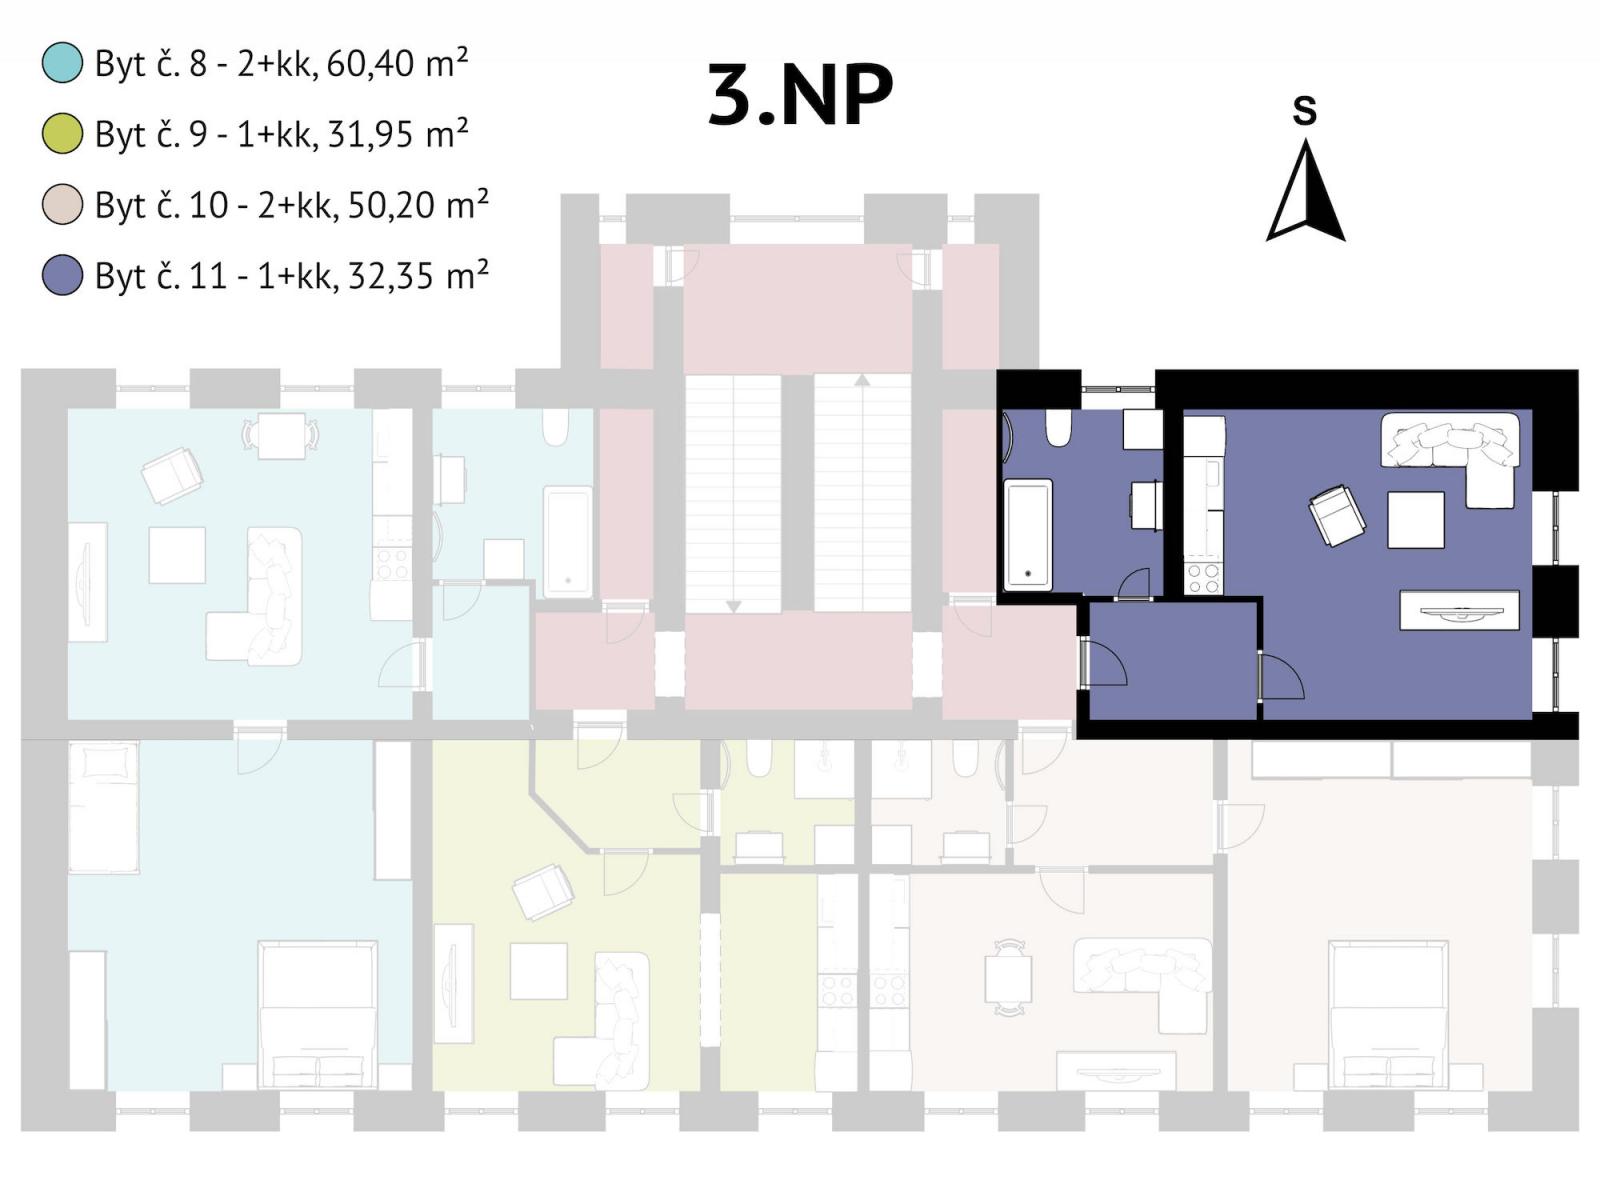 Pronájem bytu 1+kk, 32,35 m2, Liberec I-Staré Město, obrázek č. 2